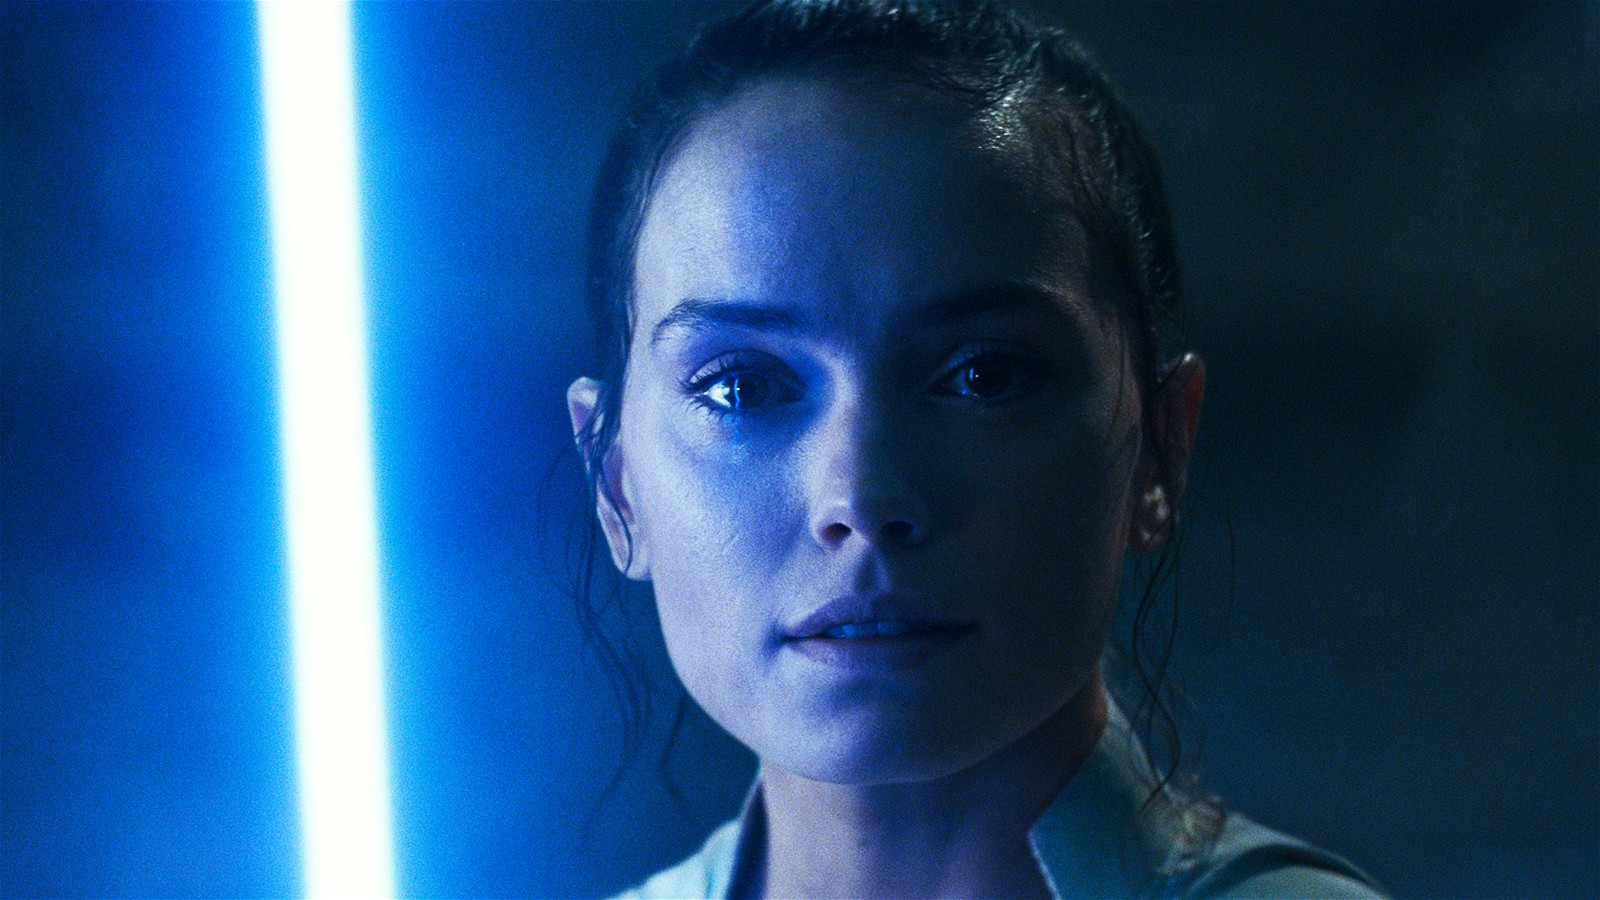 Star Wars Daisy Ridley as Rey Skywalker 